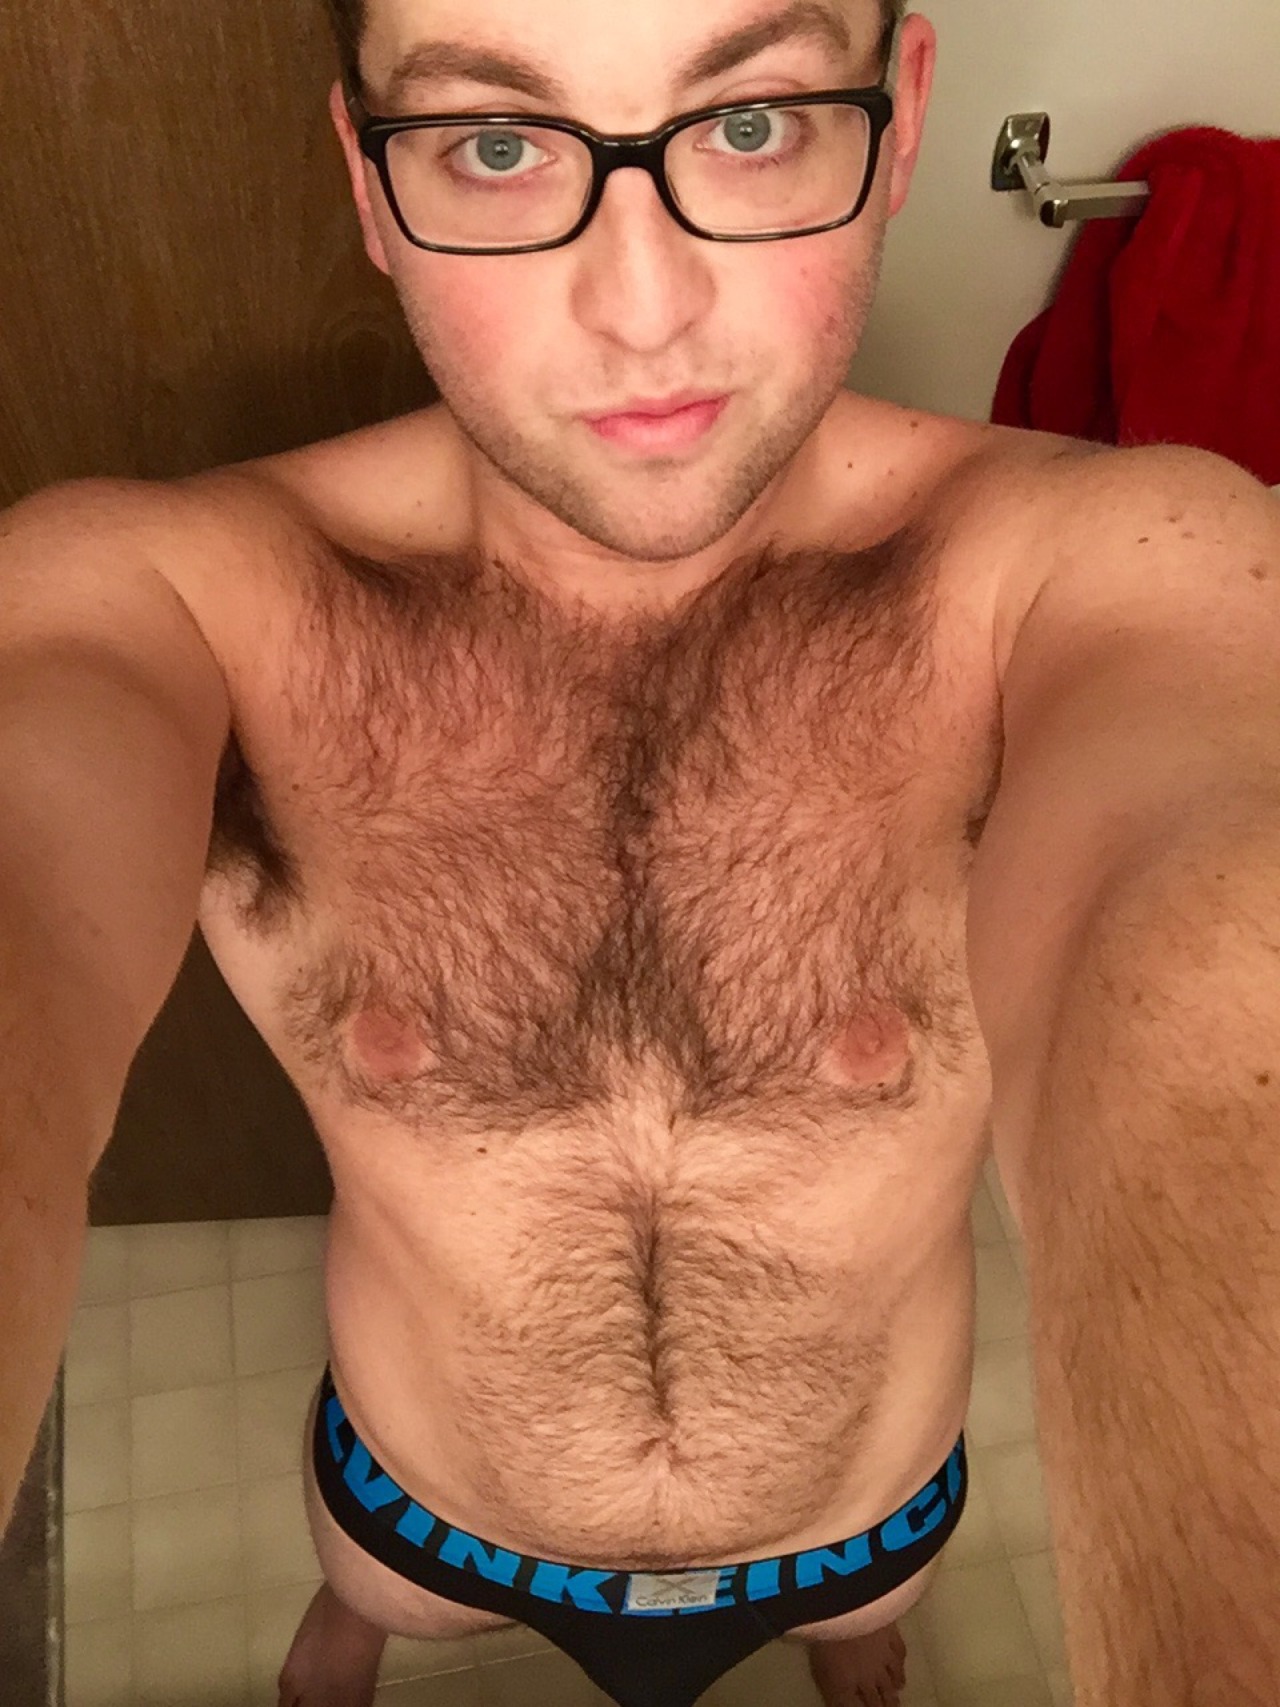 hairy guy underwear selfie